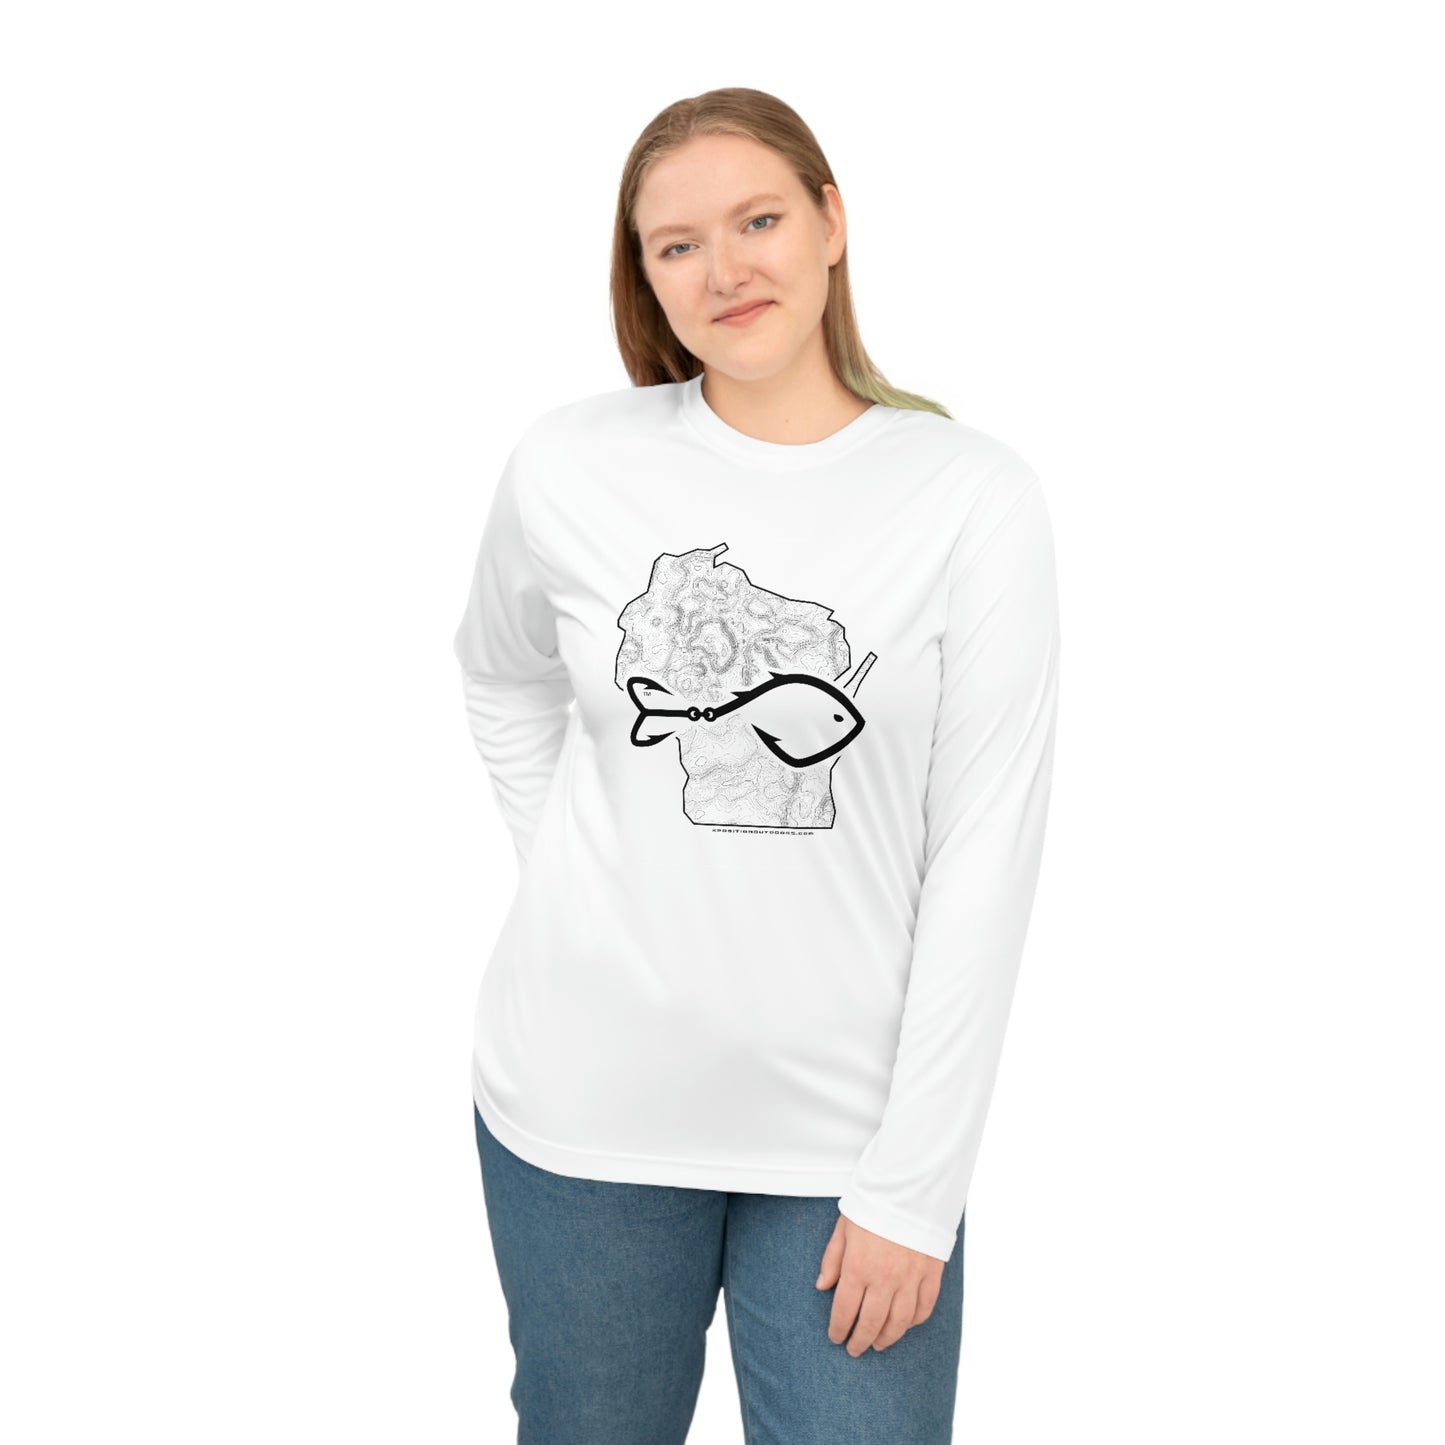 Wisconsin Fishing Icon Long Sleeve Fish Shirt